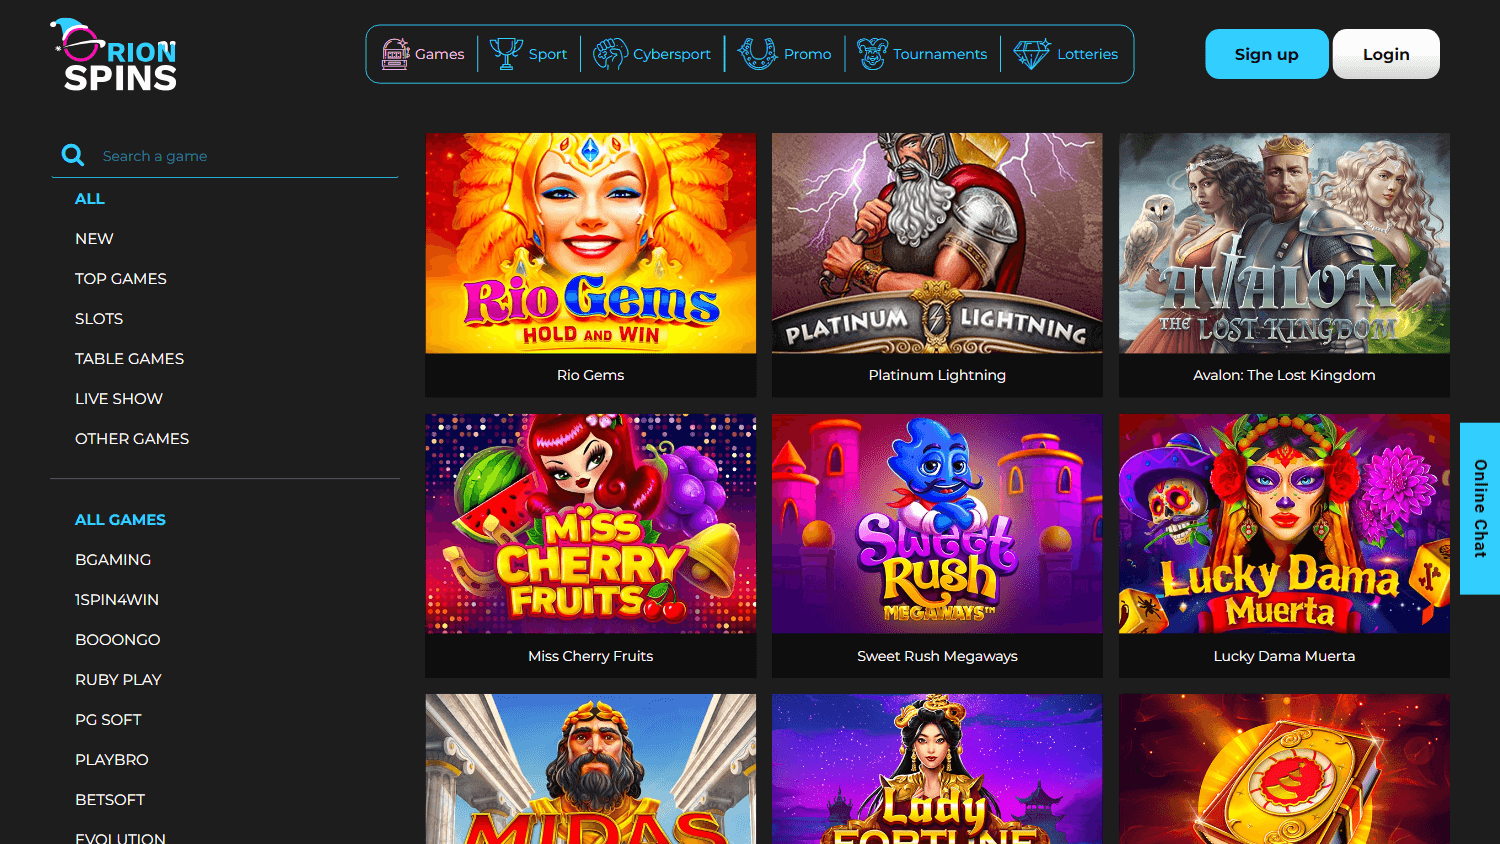 orion_spins_casino_game_gallery_desktop